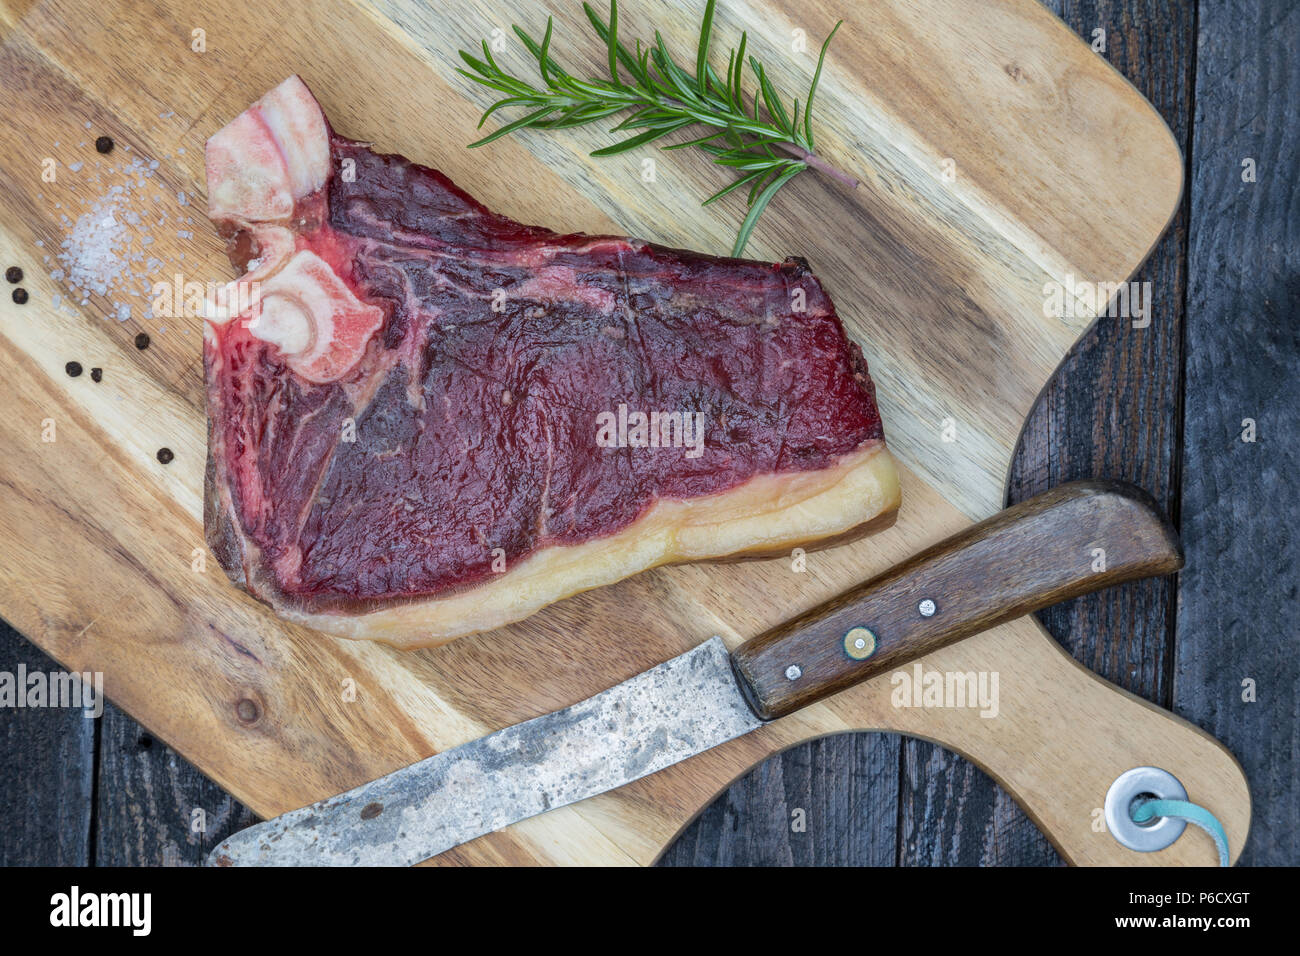 Dry aged T-bone steak raw on a wooden board. Stock Photo